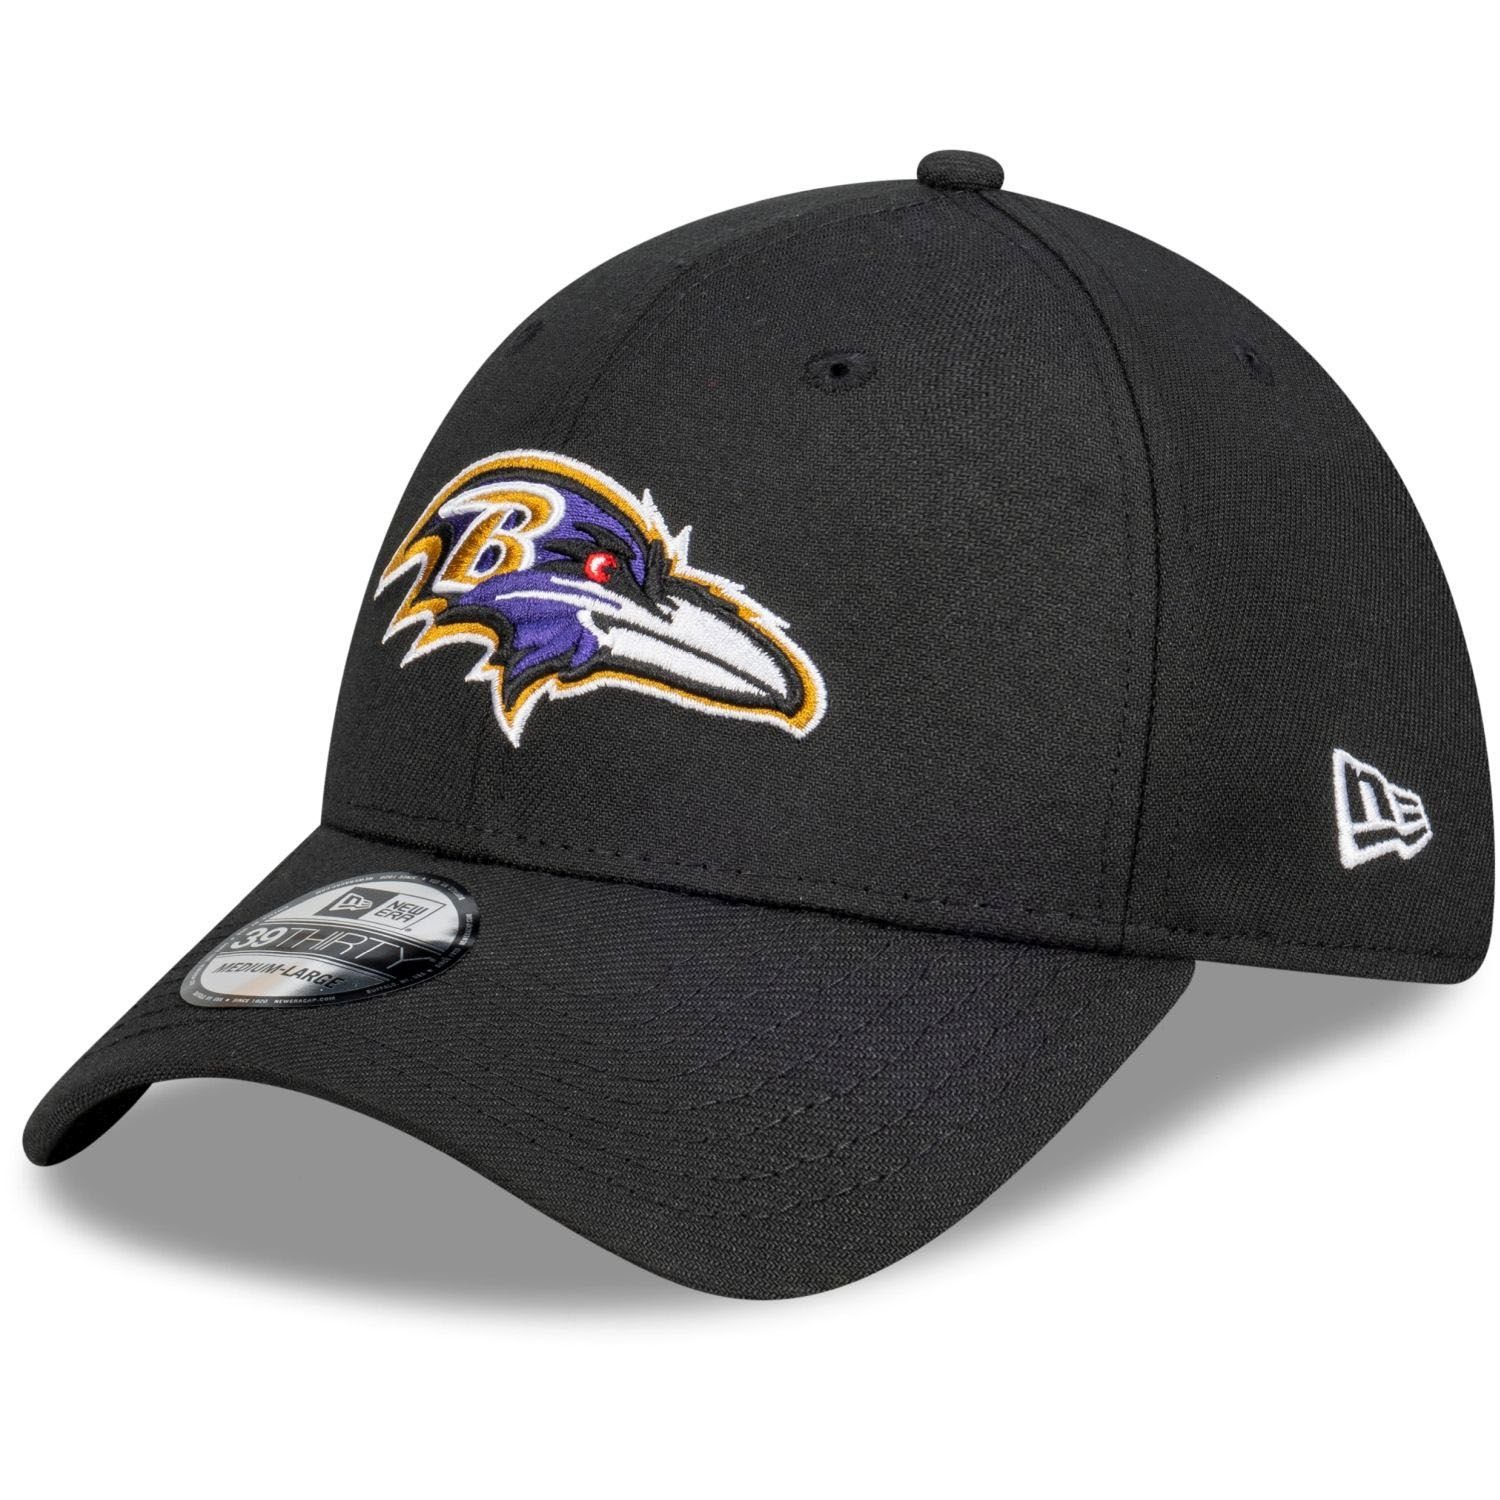 New Era Flex Cap 39Thirty StretchFit NFL Teams Baltimore Ravens